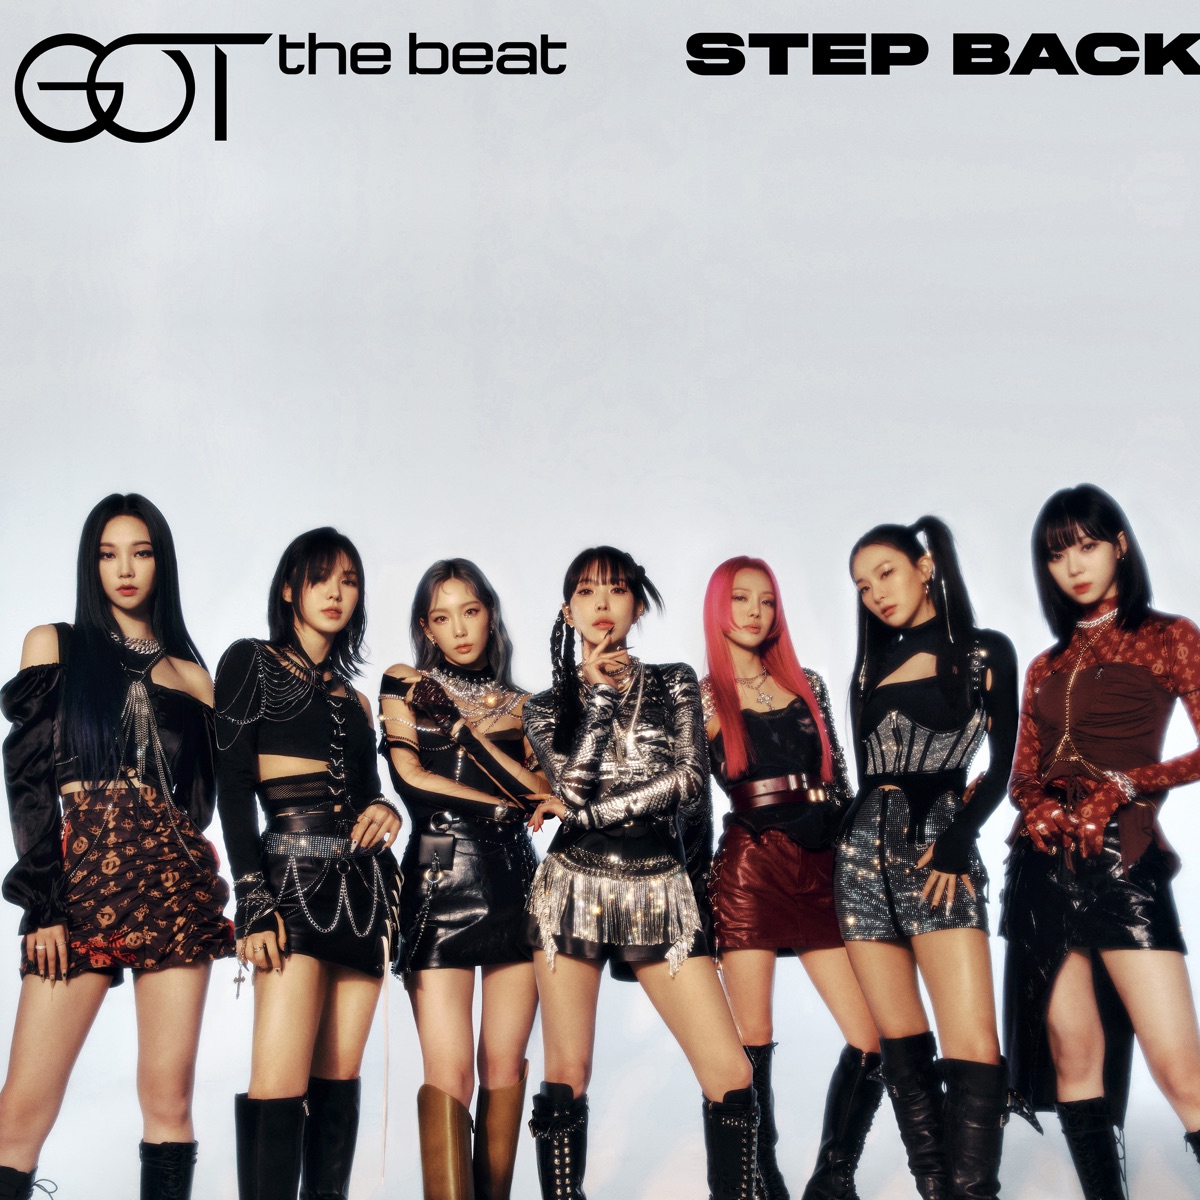 『GOT the beat (Girls On Top) - Step Back』収録の『Step Back』ジャケット